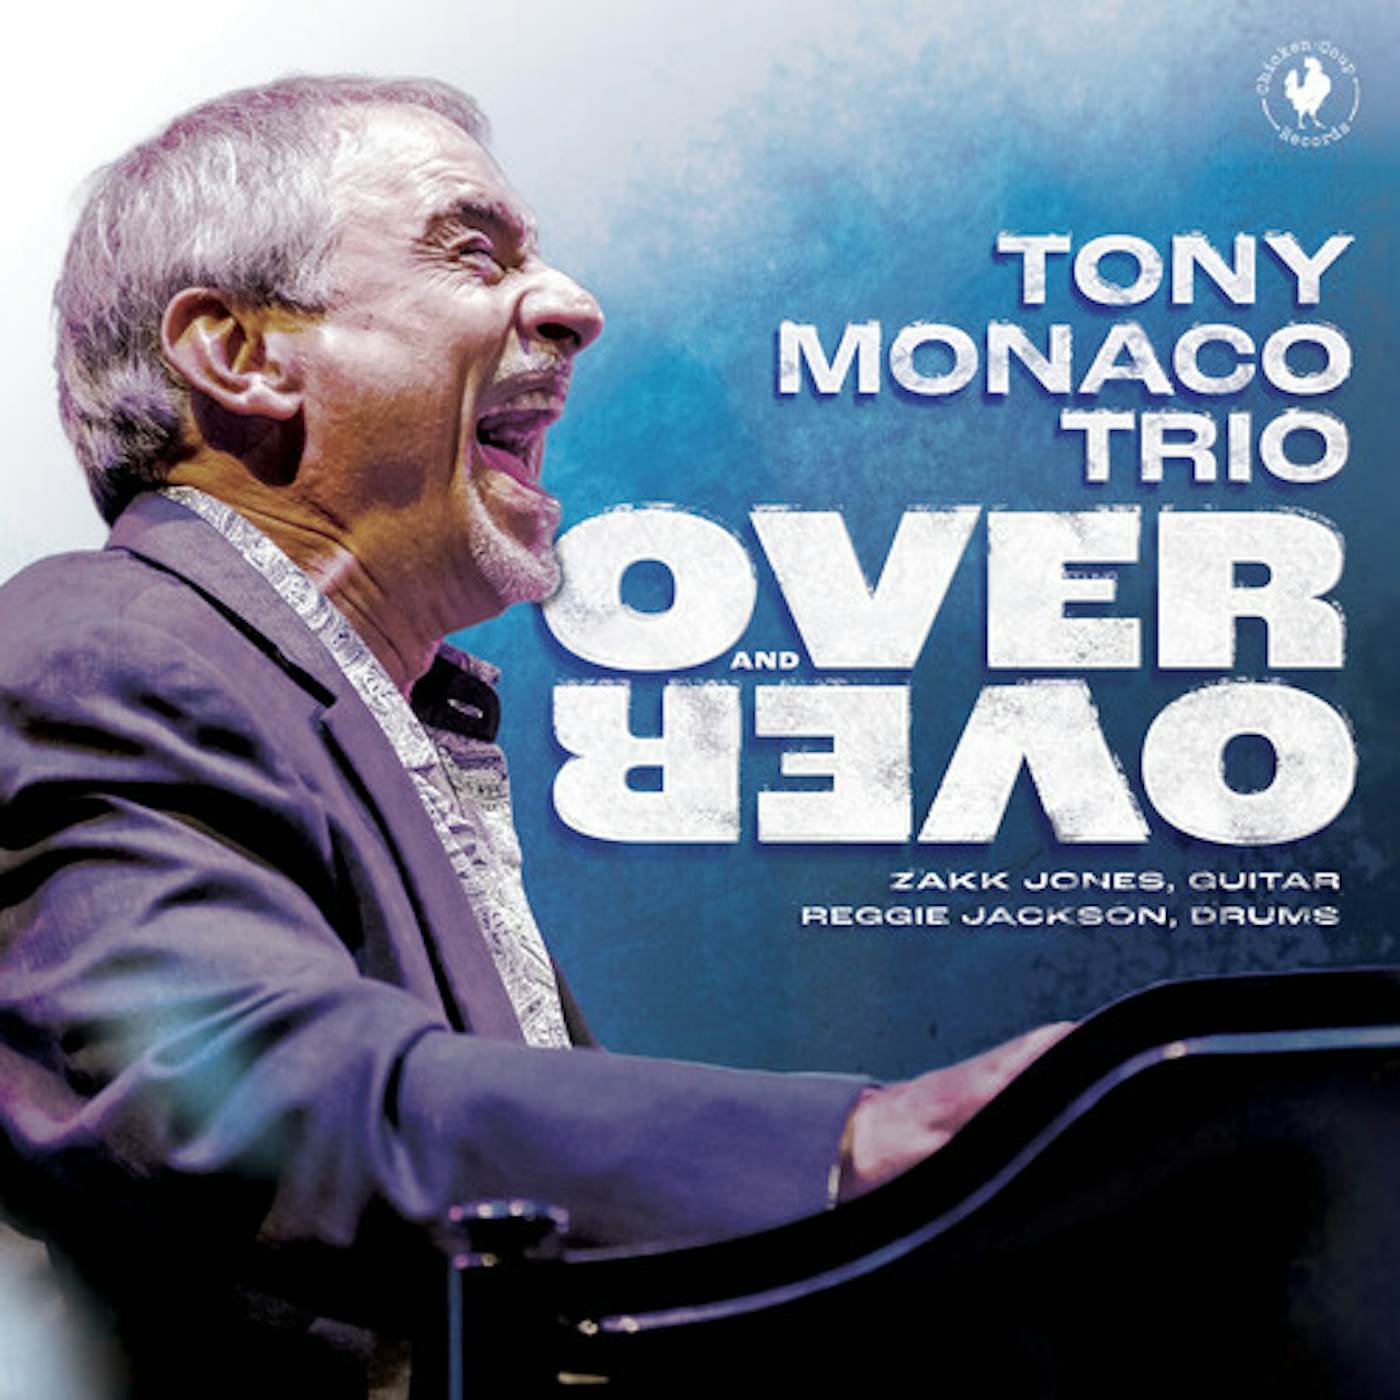 Tony Monaco OVER AND OVER CD